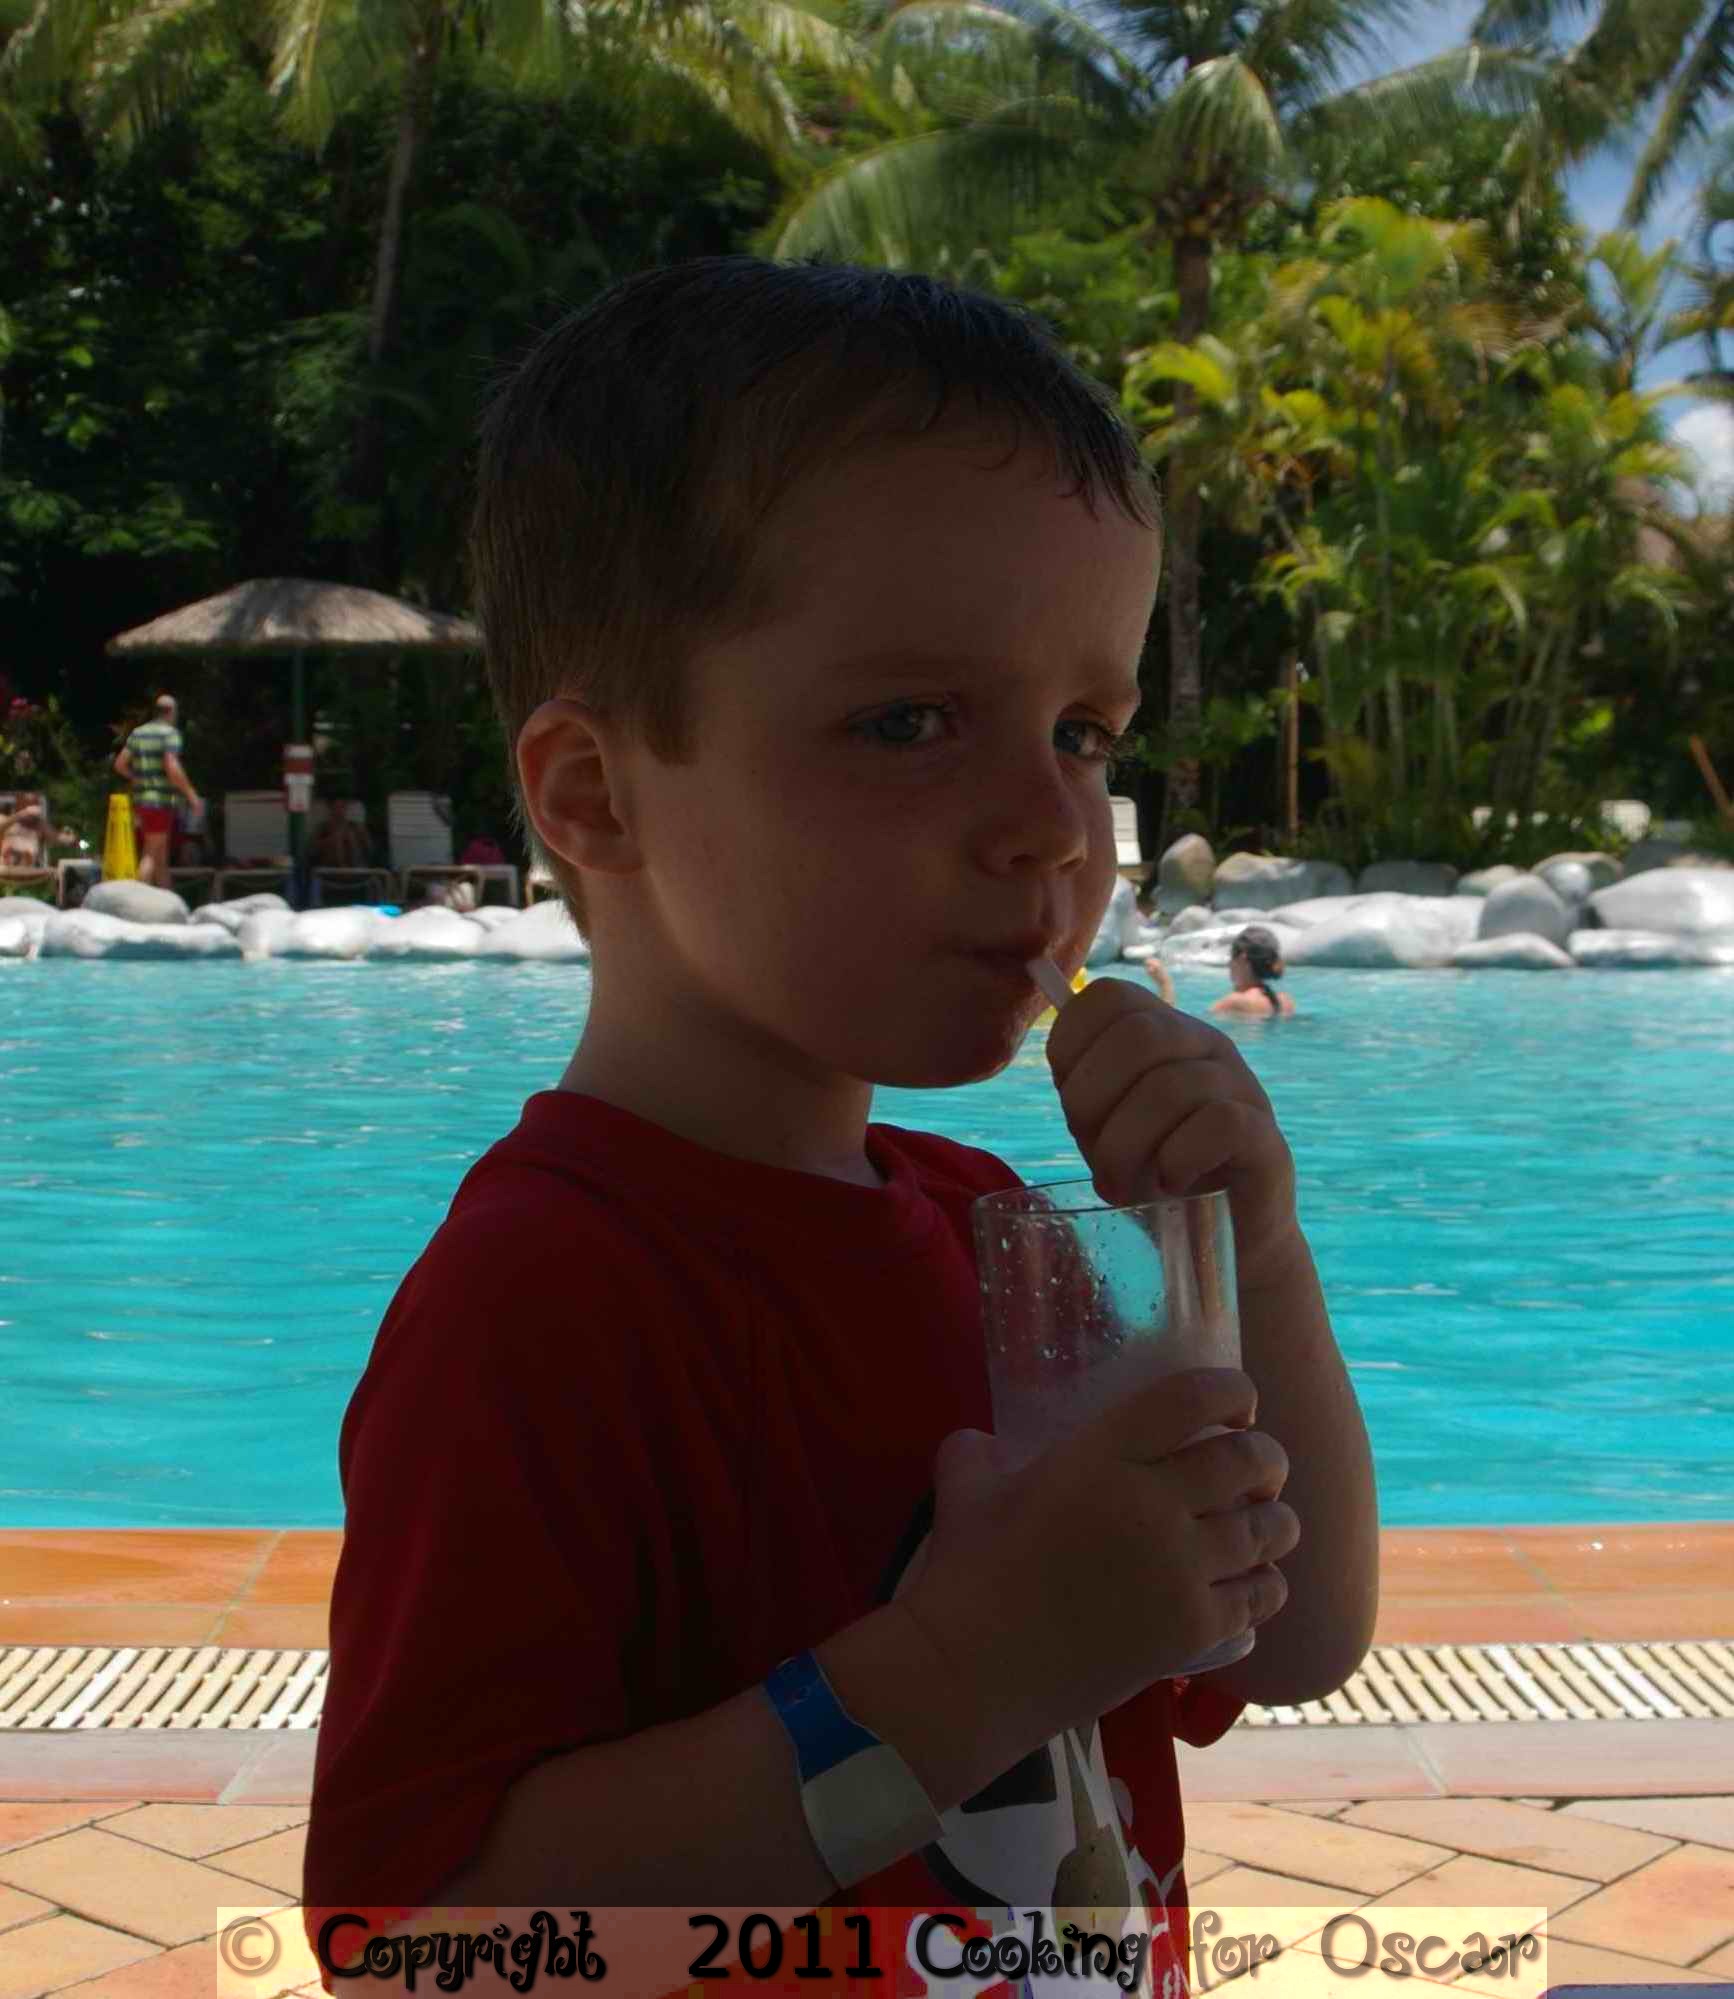 Oscar by the pool